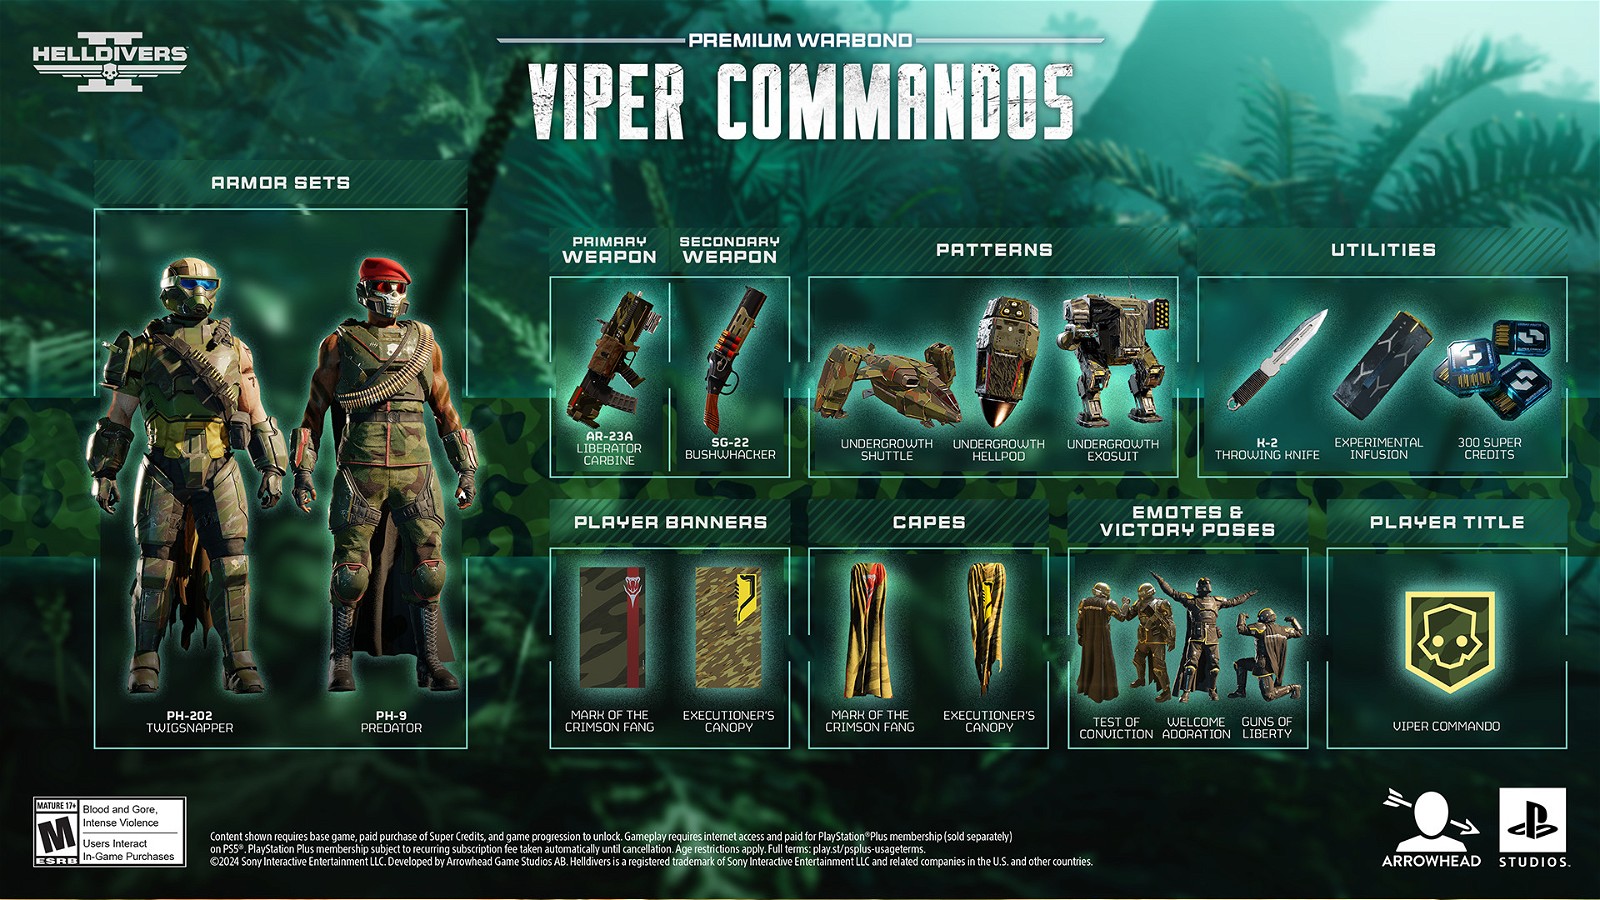 The Viper Commandos Premium Warbond for Helldivers 2 (via Arrowhead Game Studios)